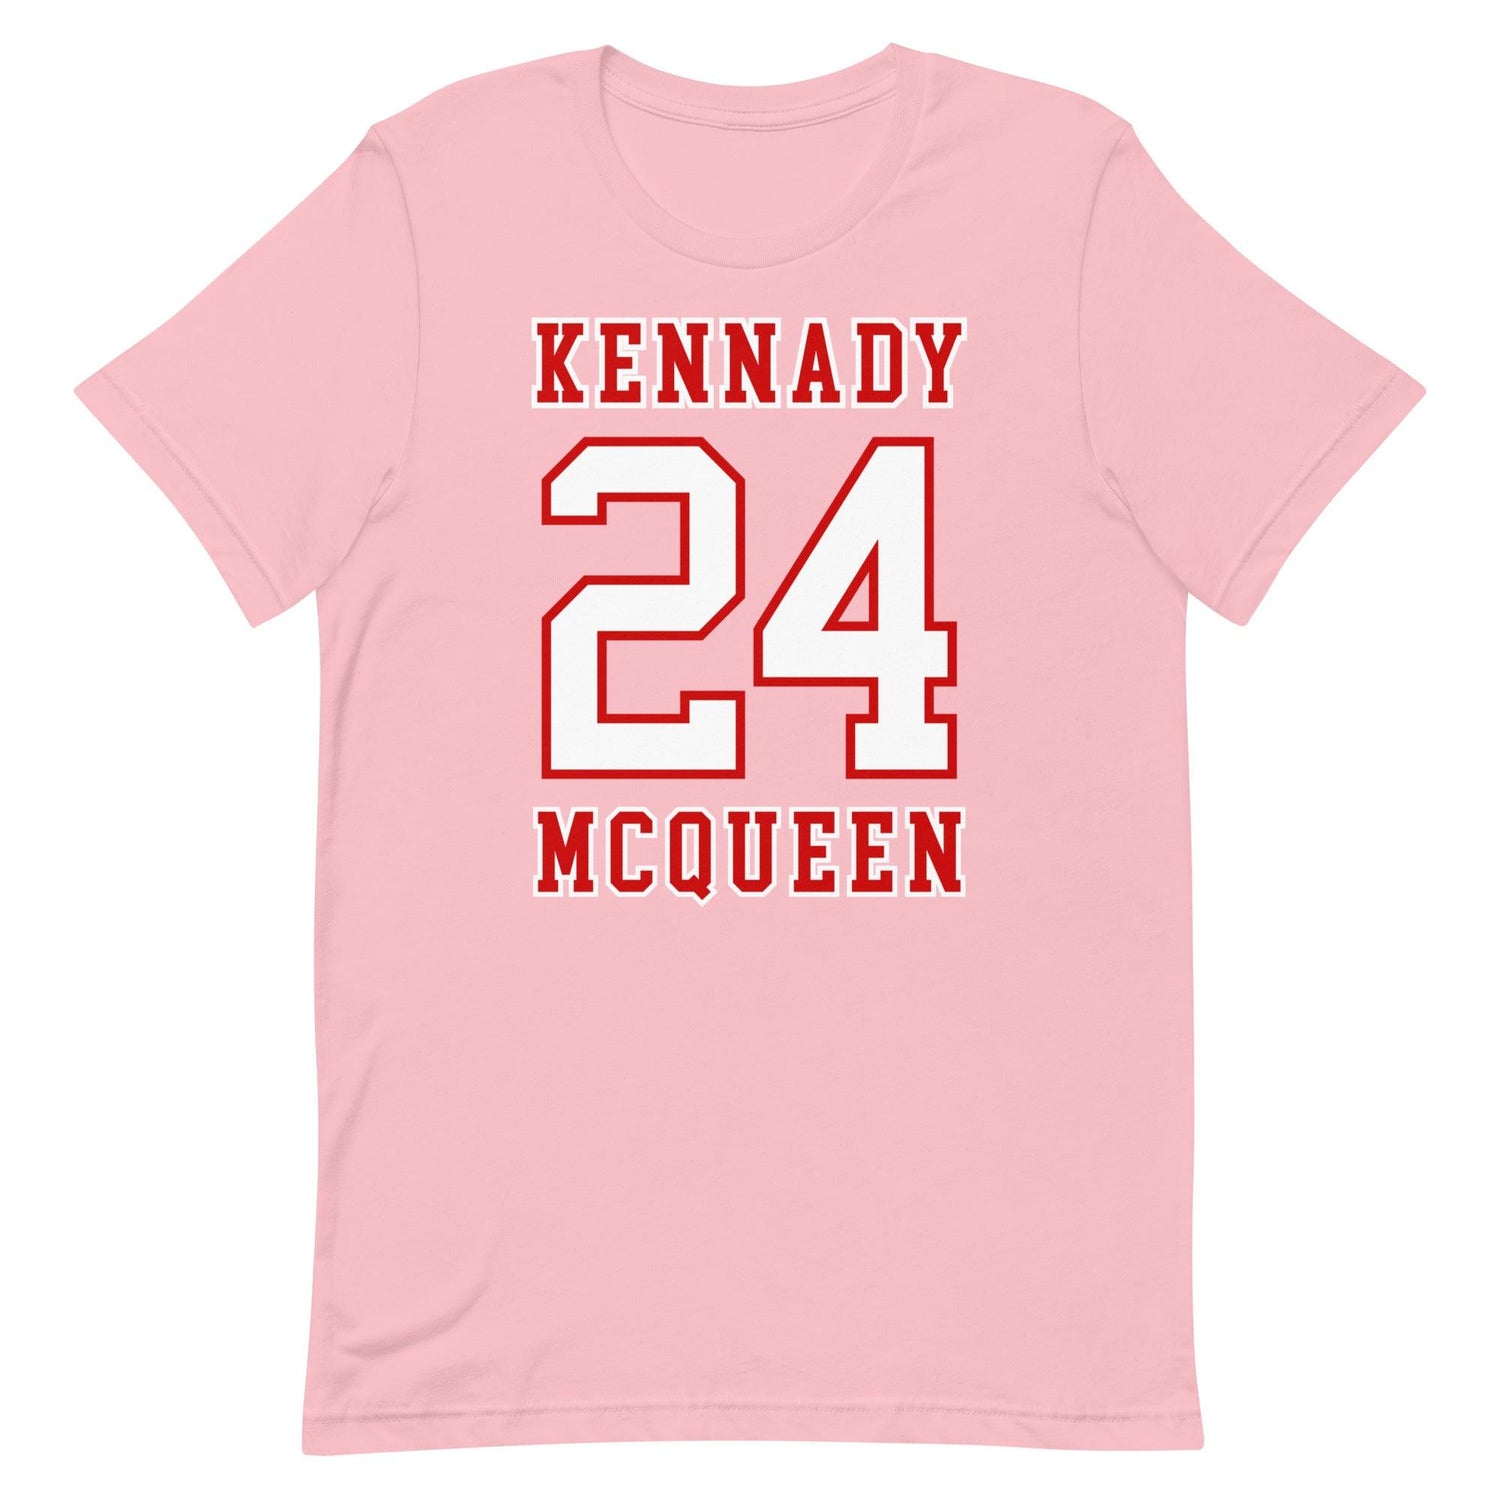 Kennady McQueen "Jersey" t-shirt - Fan Arch